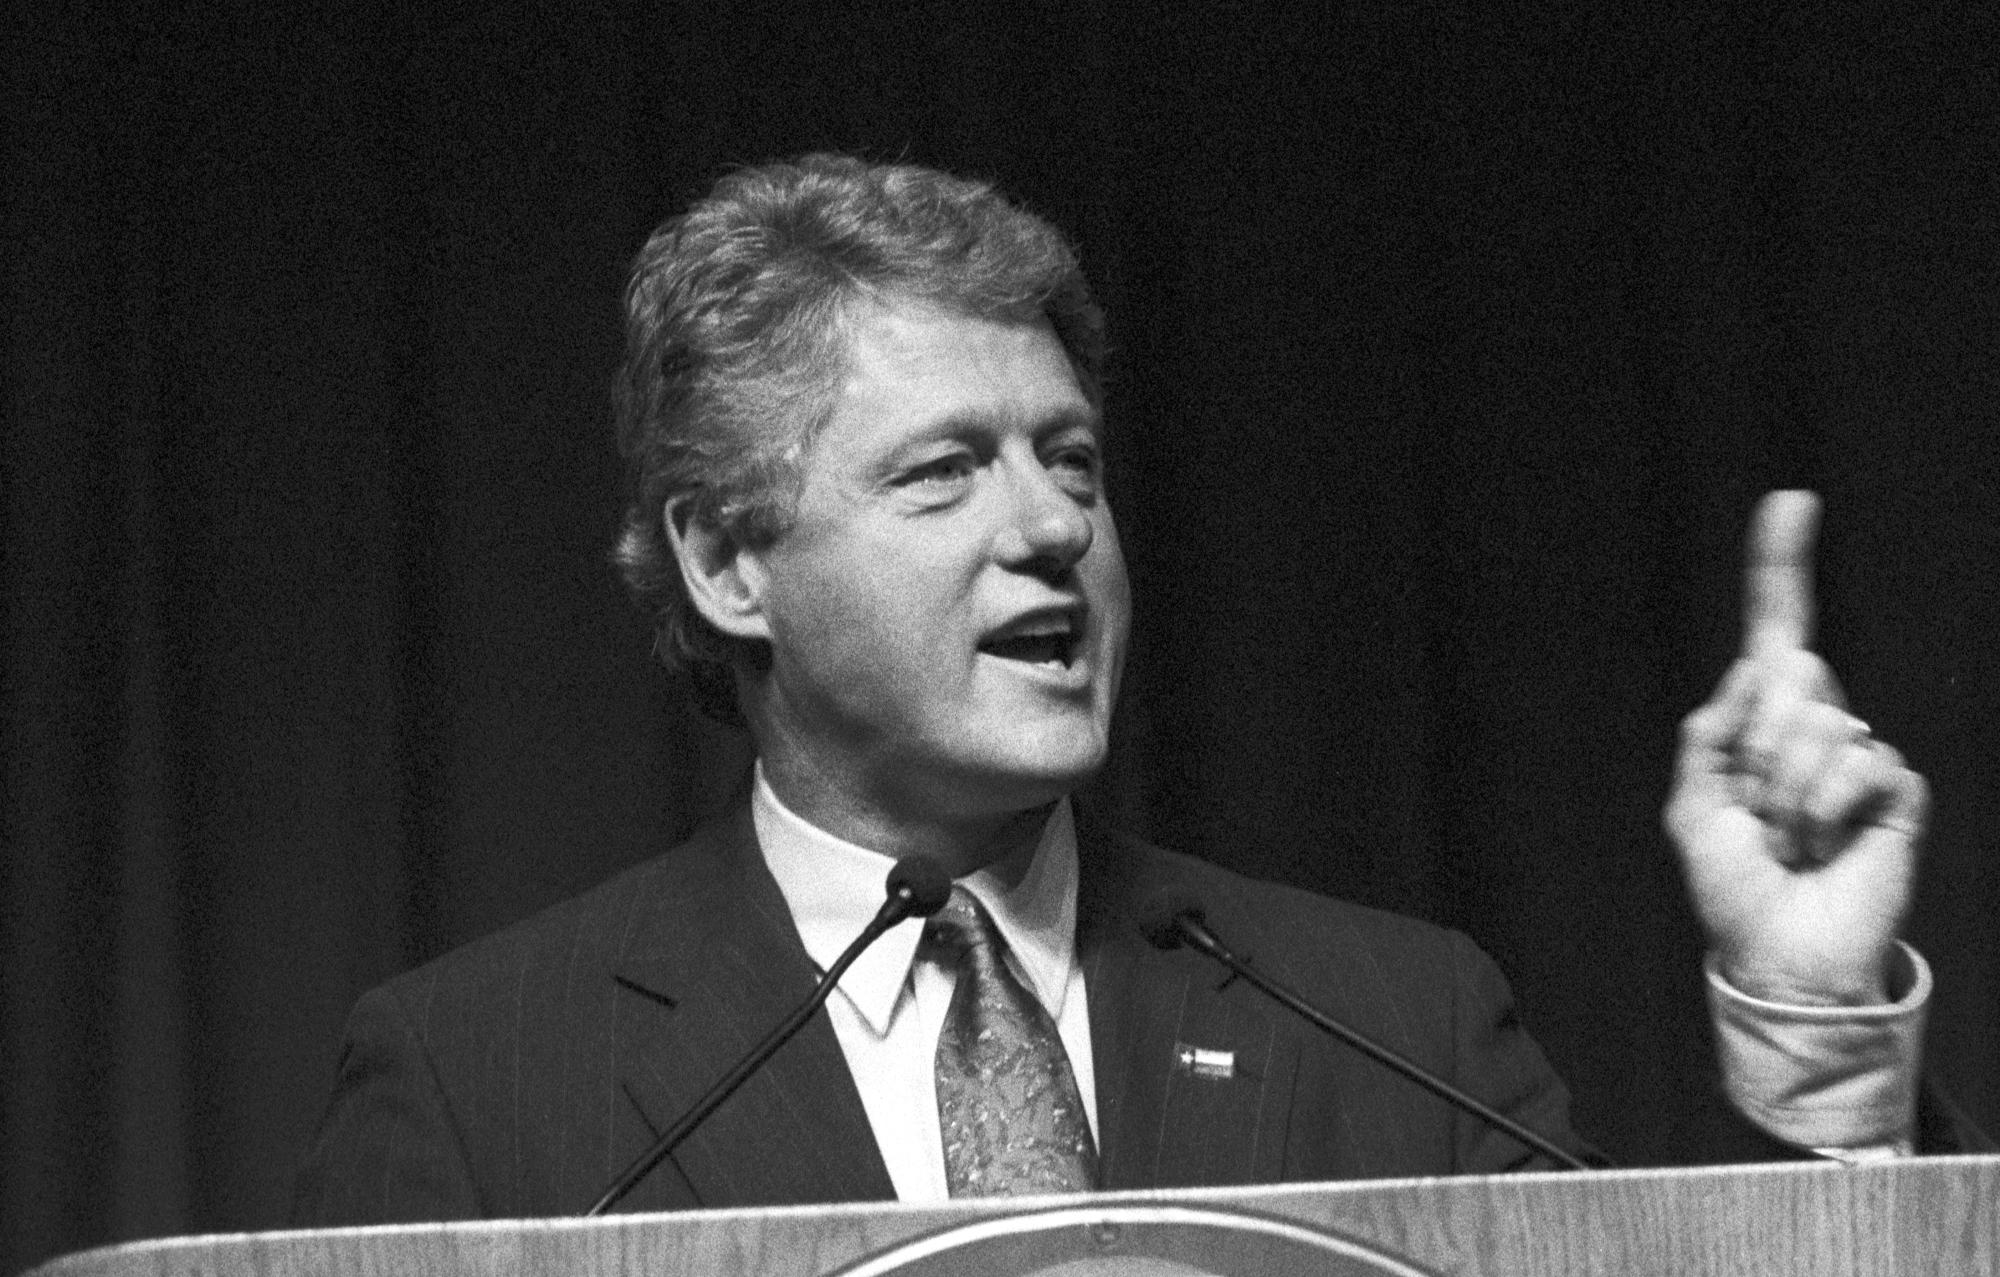 Daily Texan (1991-1992) - Bill Clinton #3